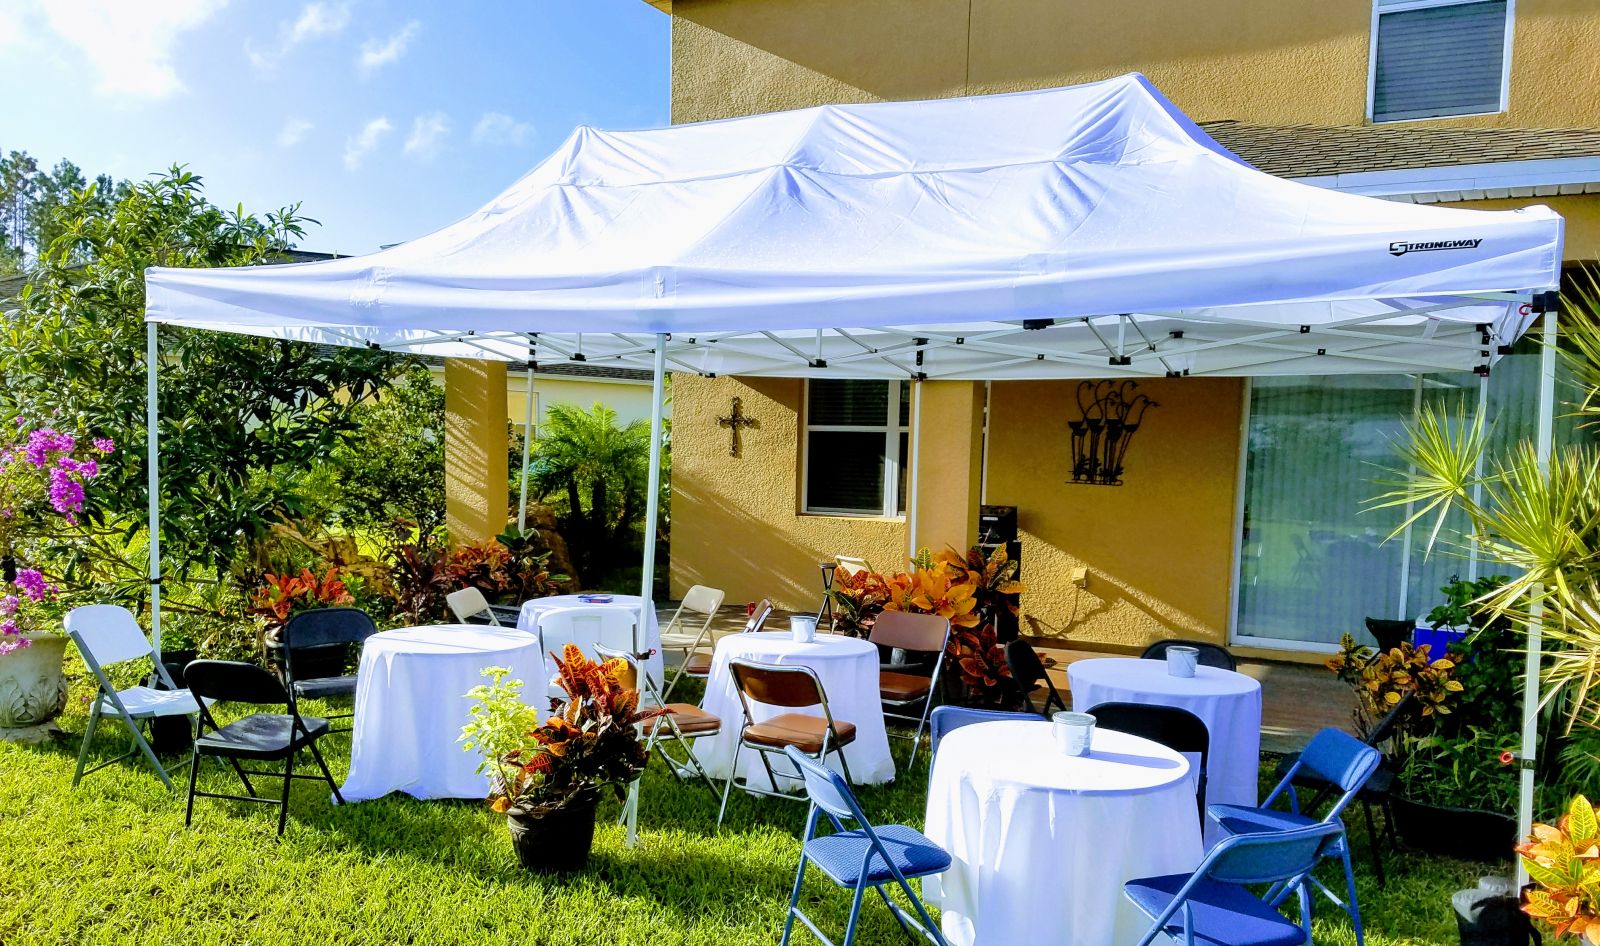 Canopy Tent 10 x 20 | Allin1bounce.com Apopka FL